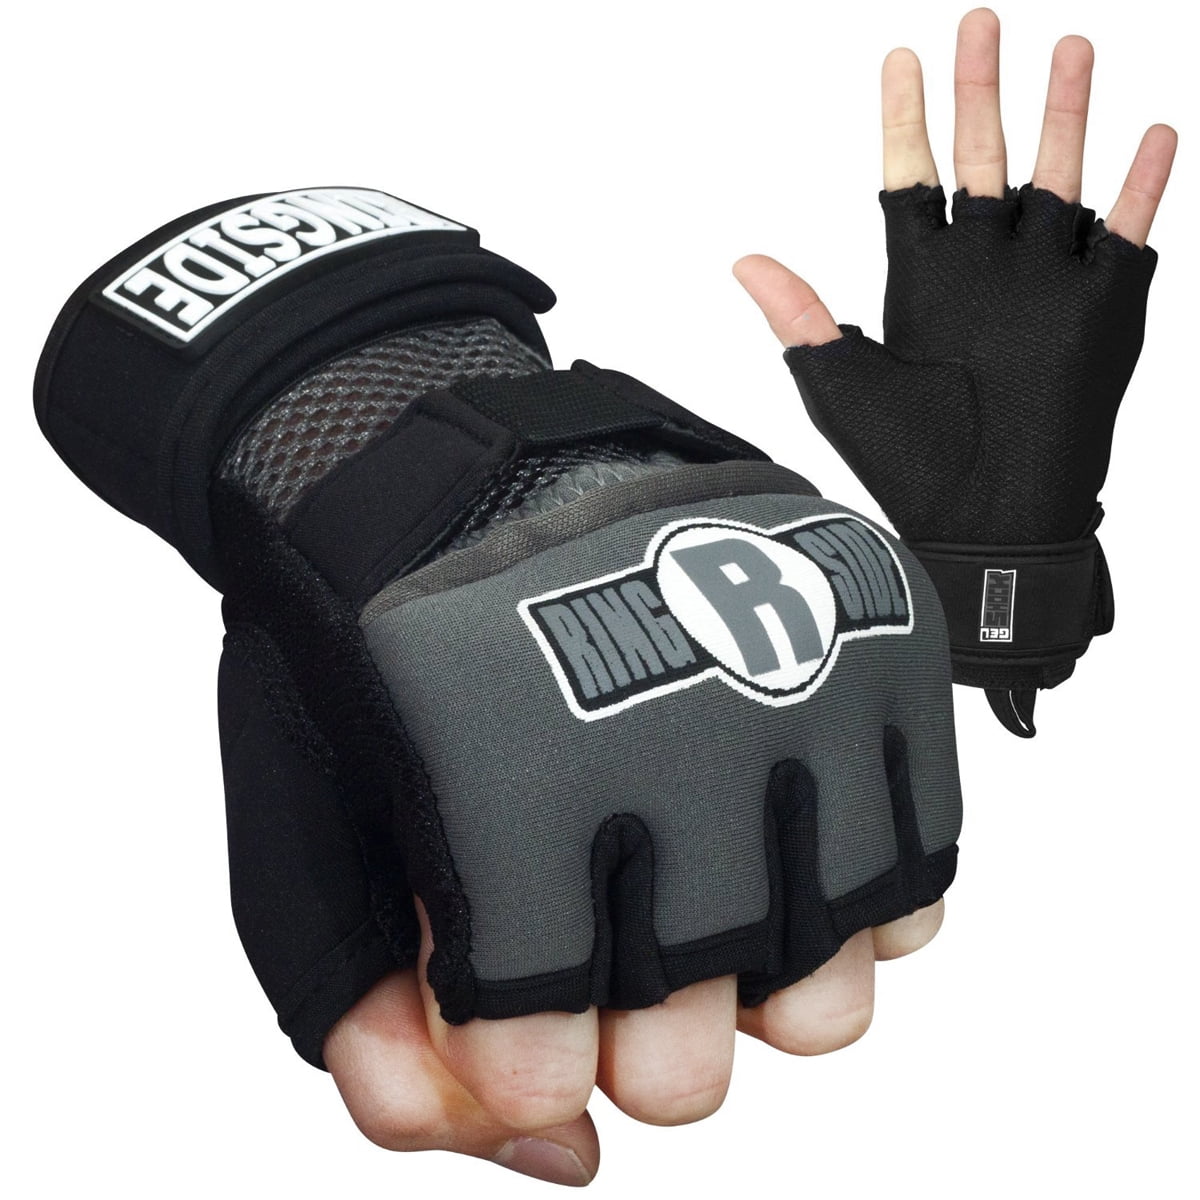 Ringside Quick Boxing Handwraps 609224949951 for sale online 